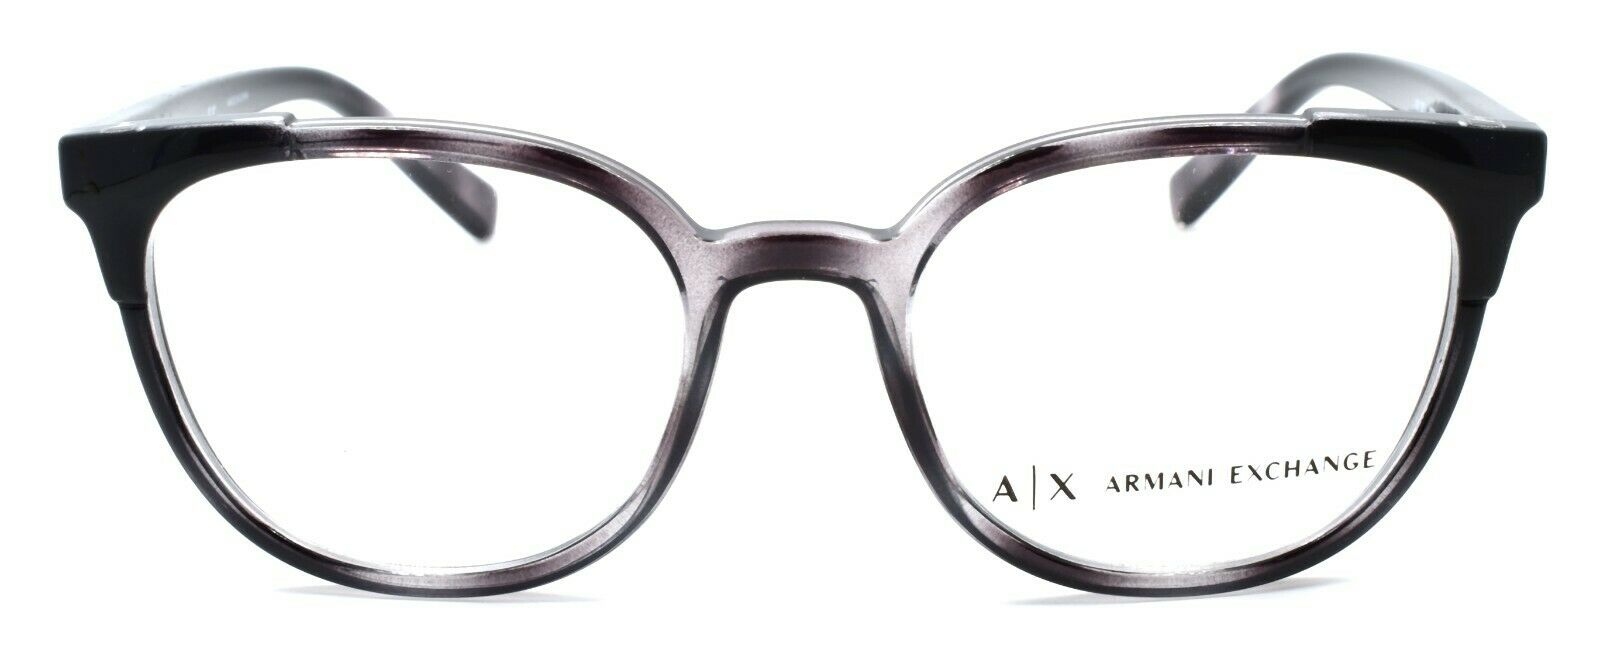 2-Armani Exchange AX3051 8251 Women's Eyeglasses Frames 51-19-140 Grey Havana-8053672884869-IKSpecs